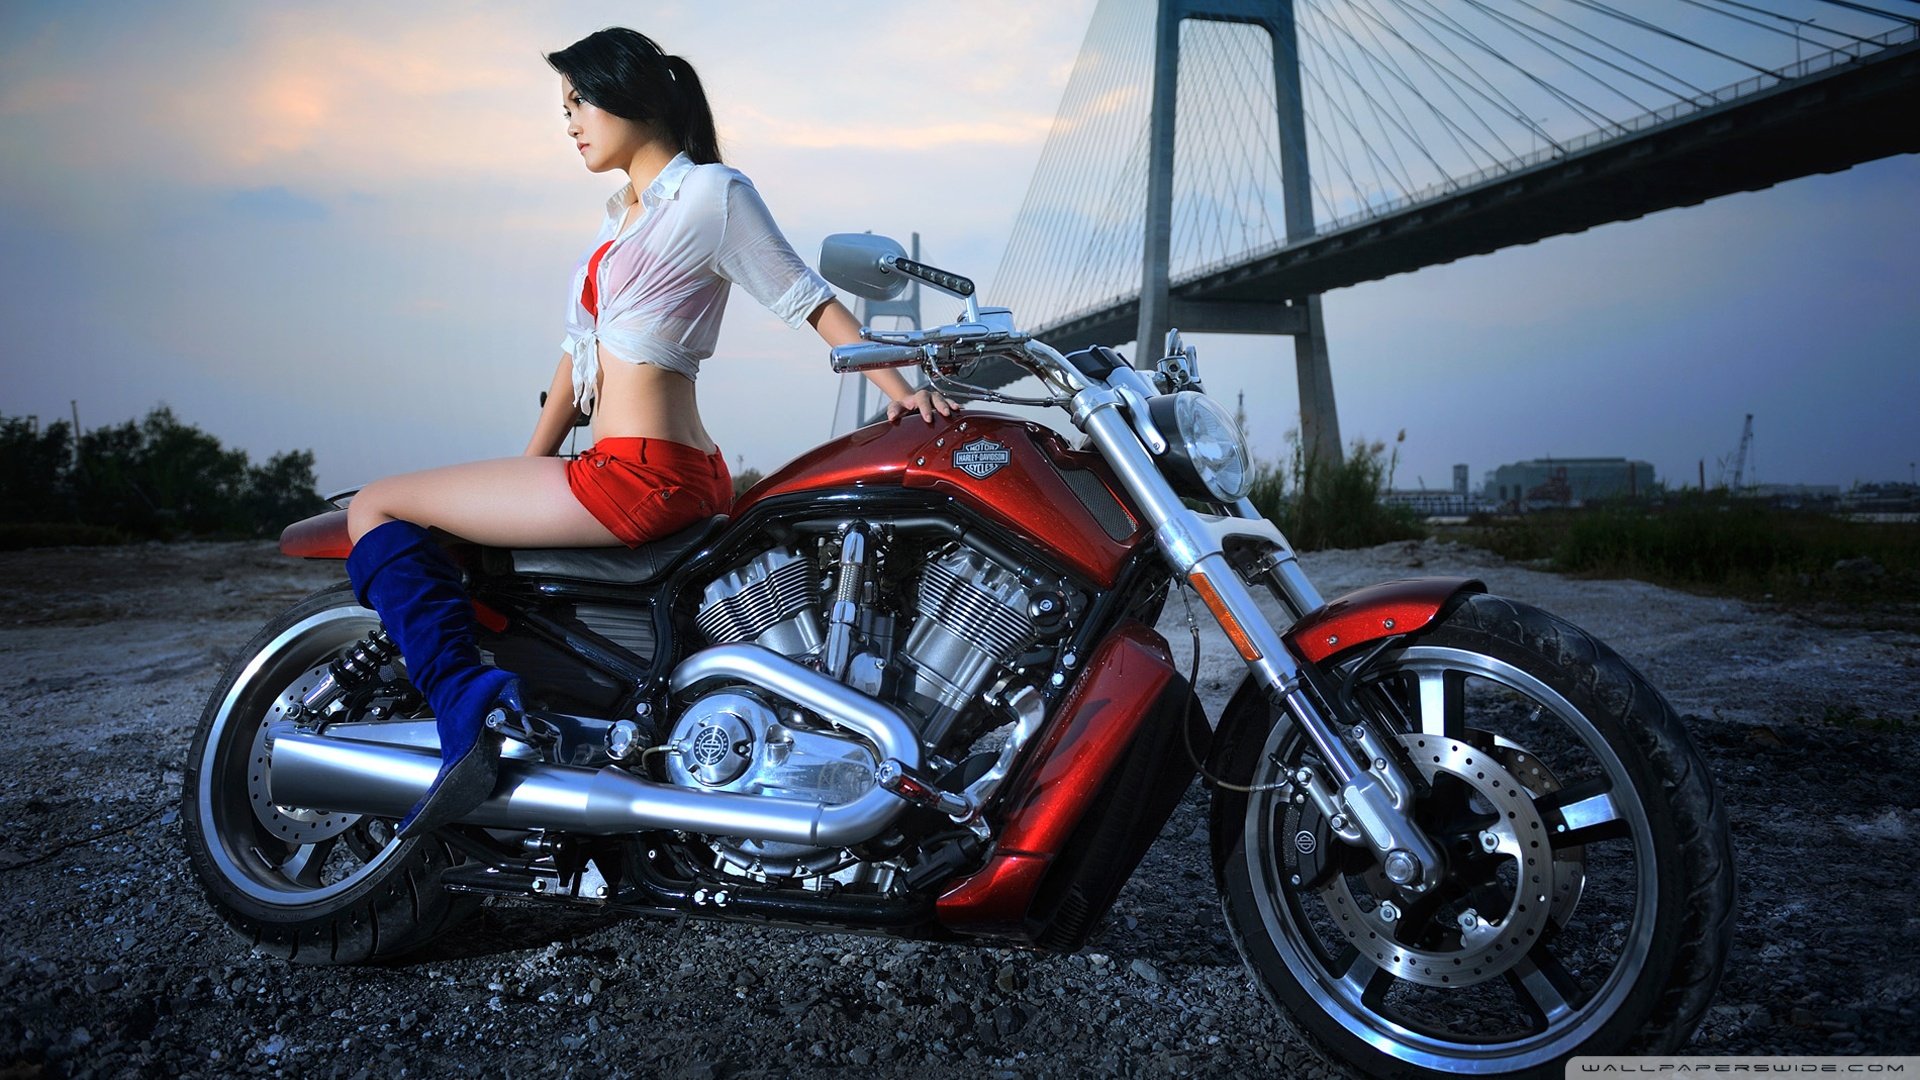 Harley Davidson Bike Wallpapers 7 | Harley Davidson Bike